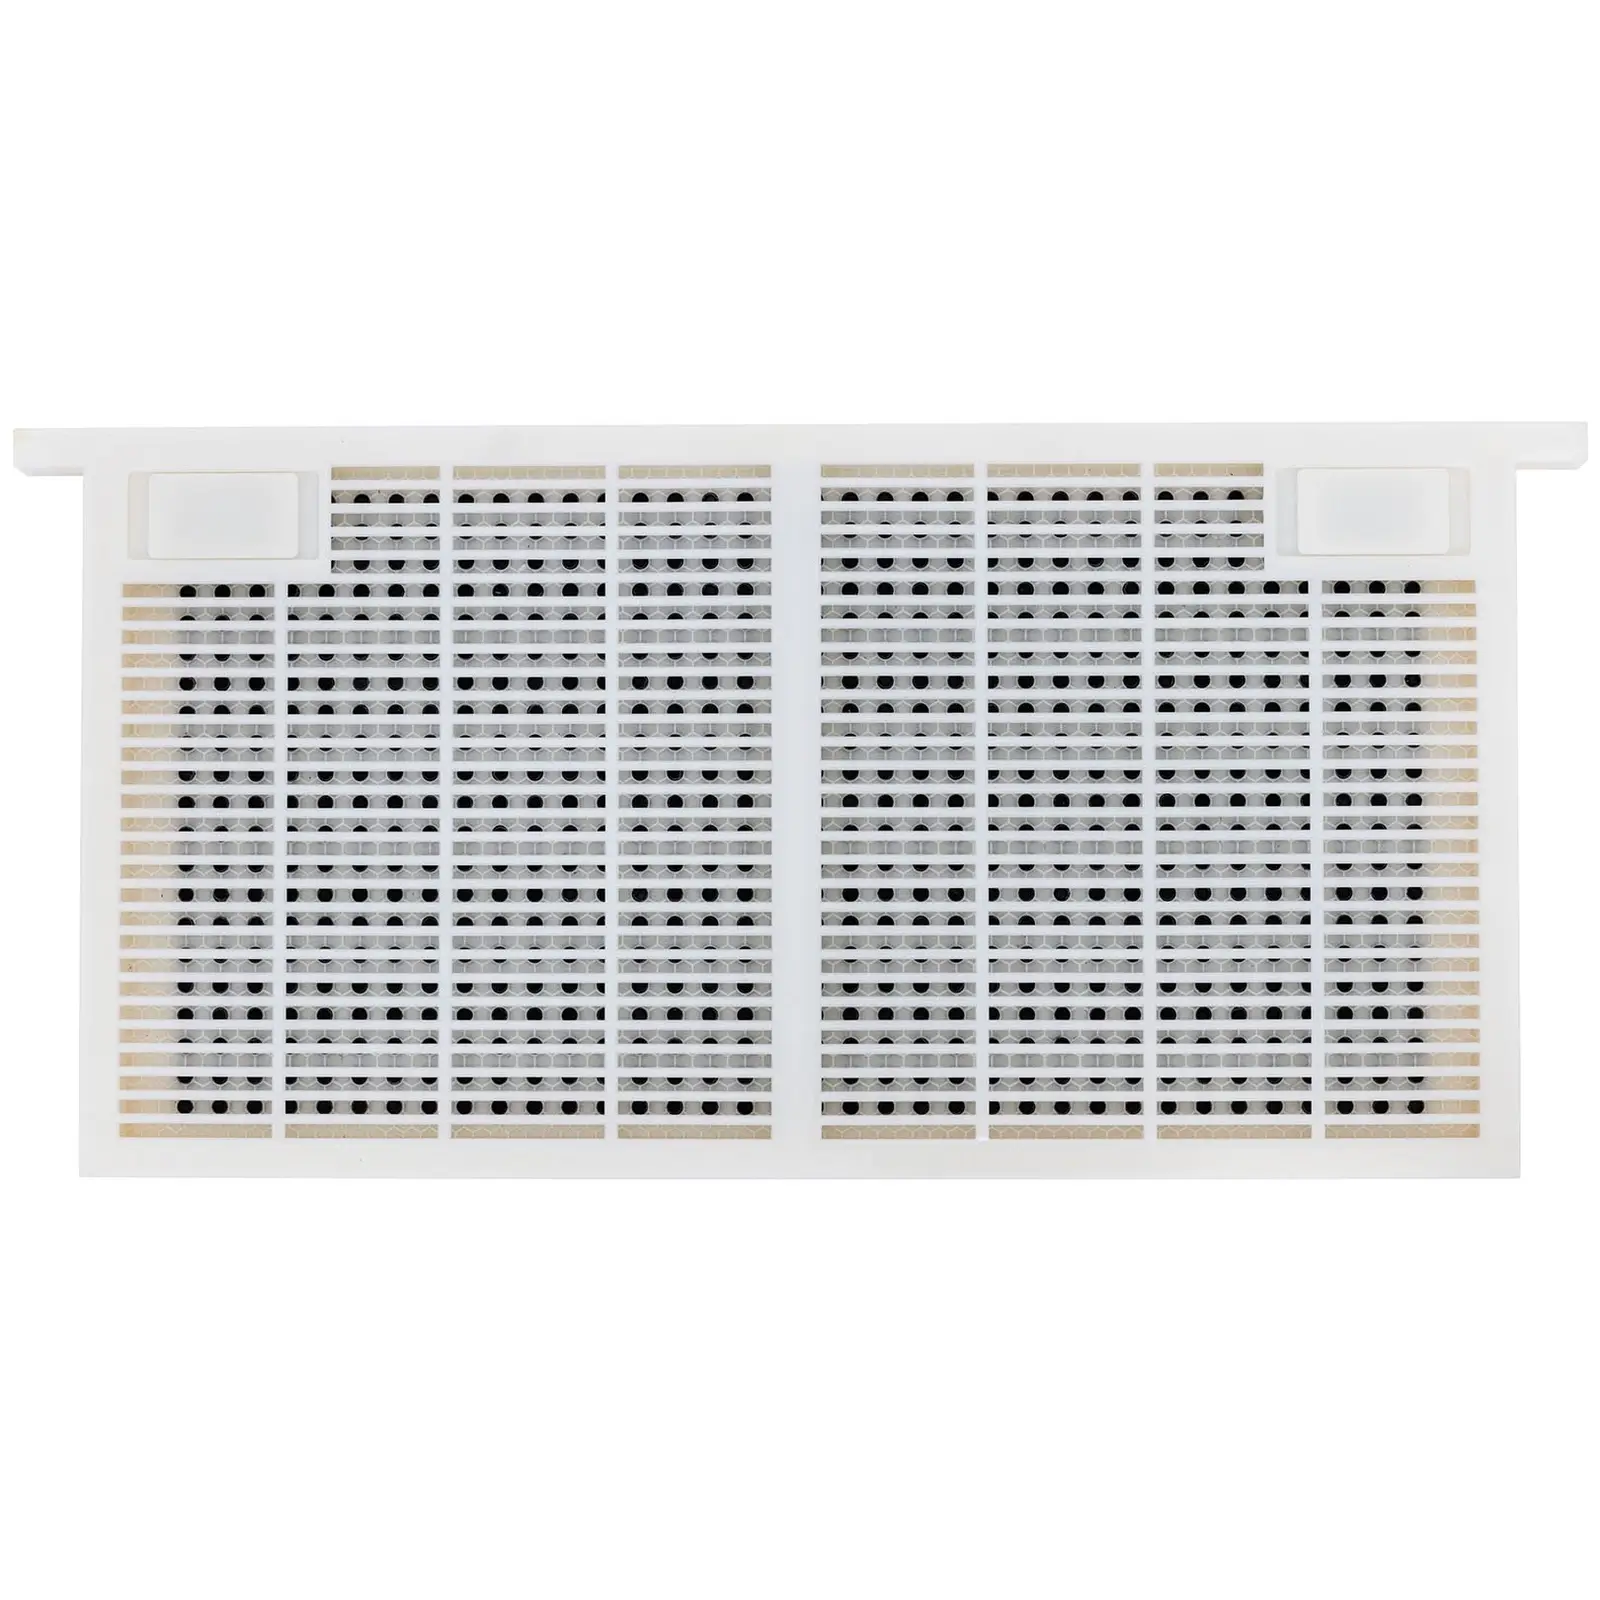 Queen avlssystem - plast - 483 x 232 x 42 mm